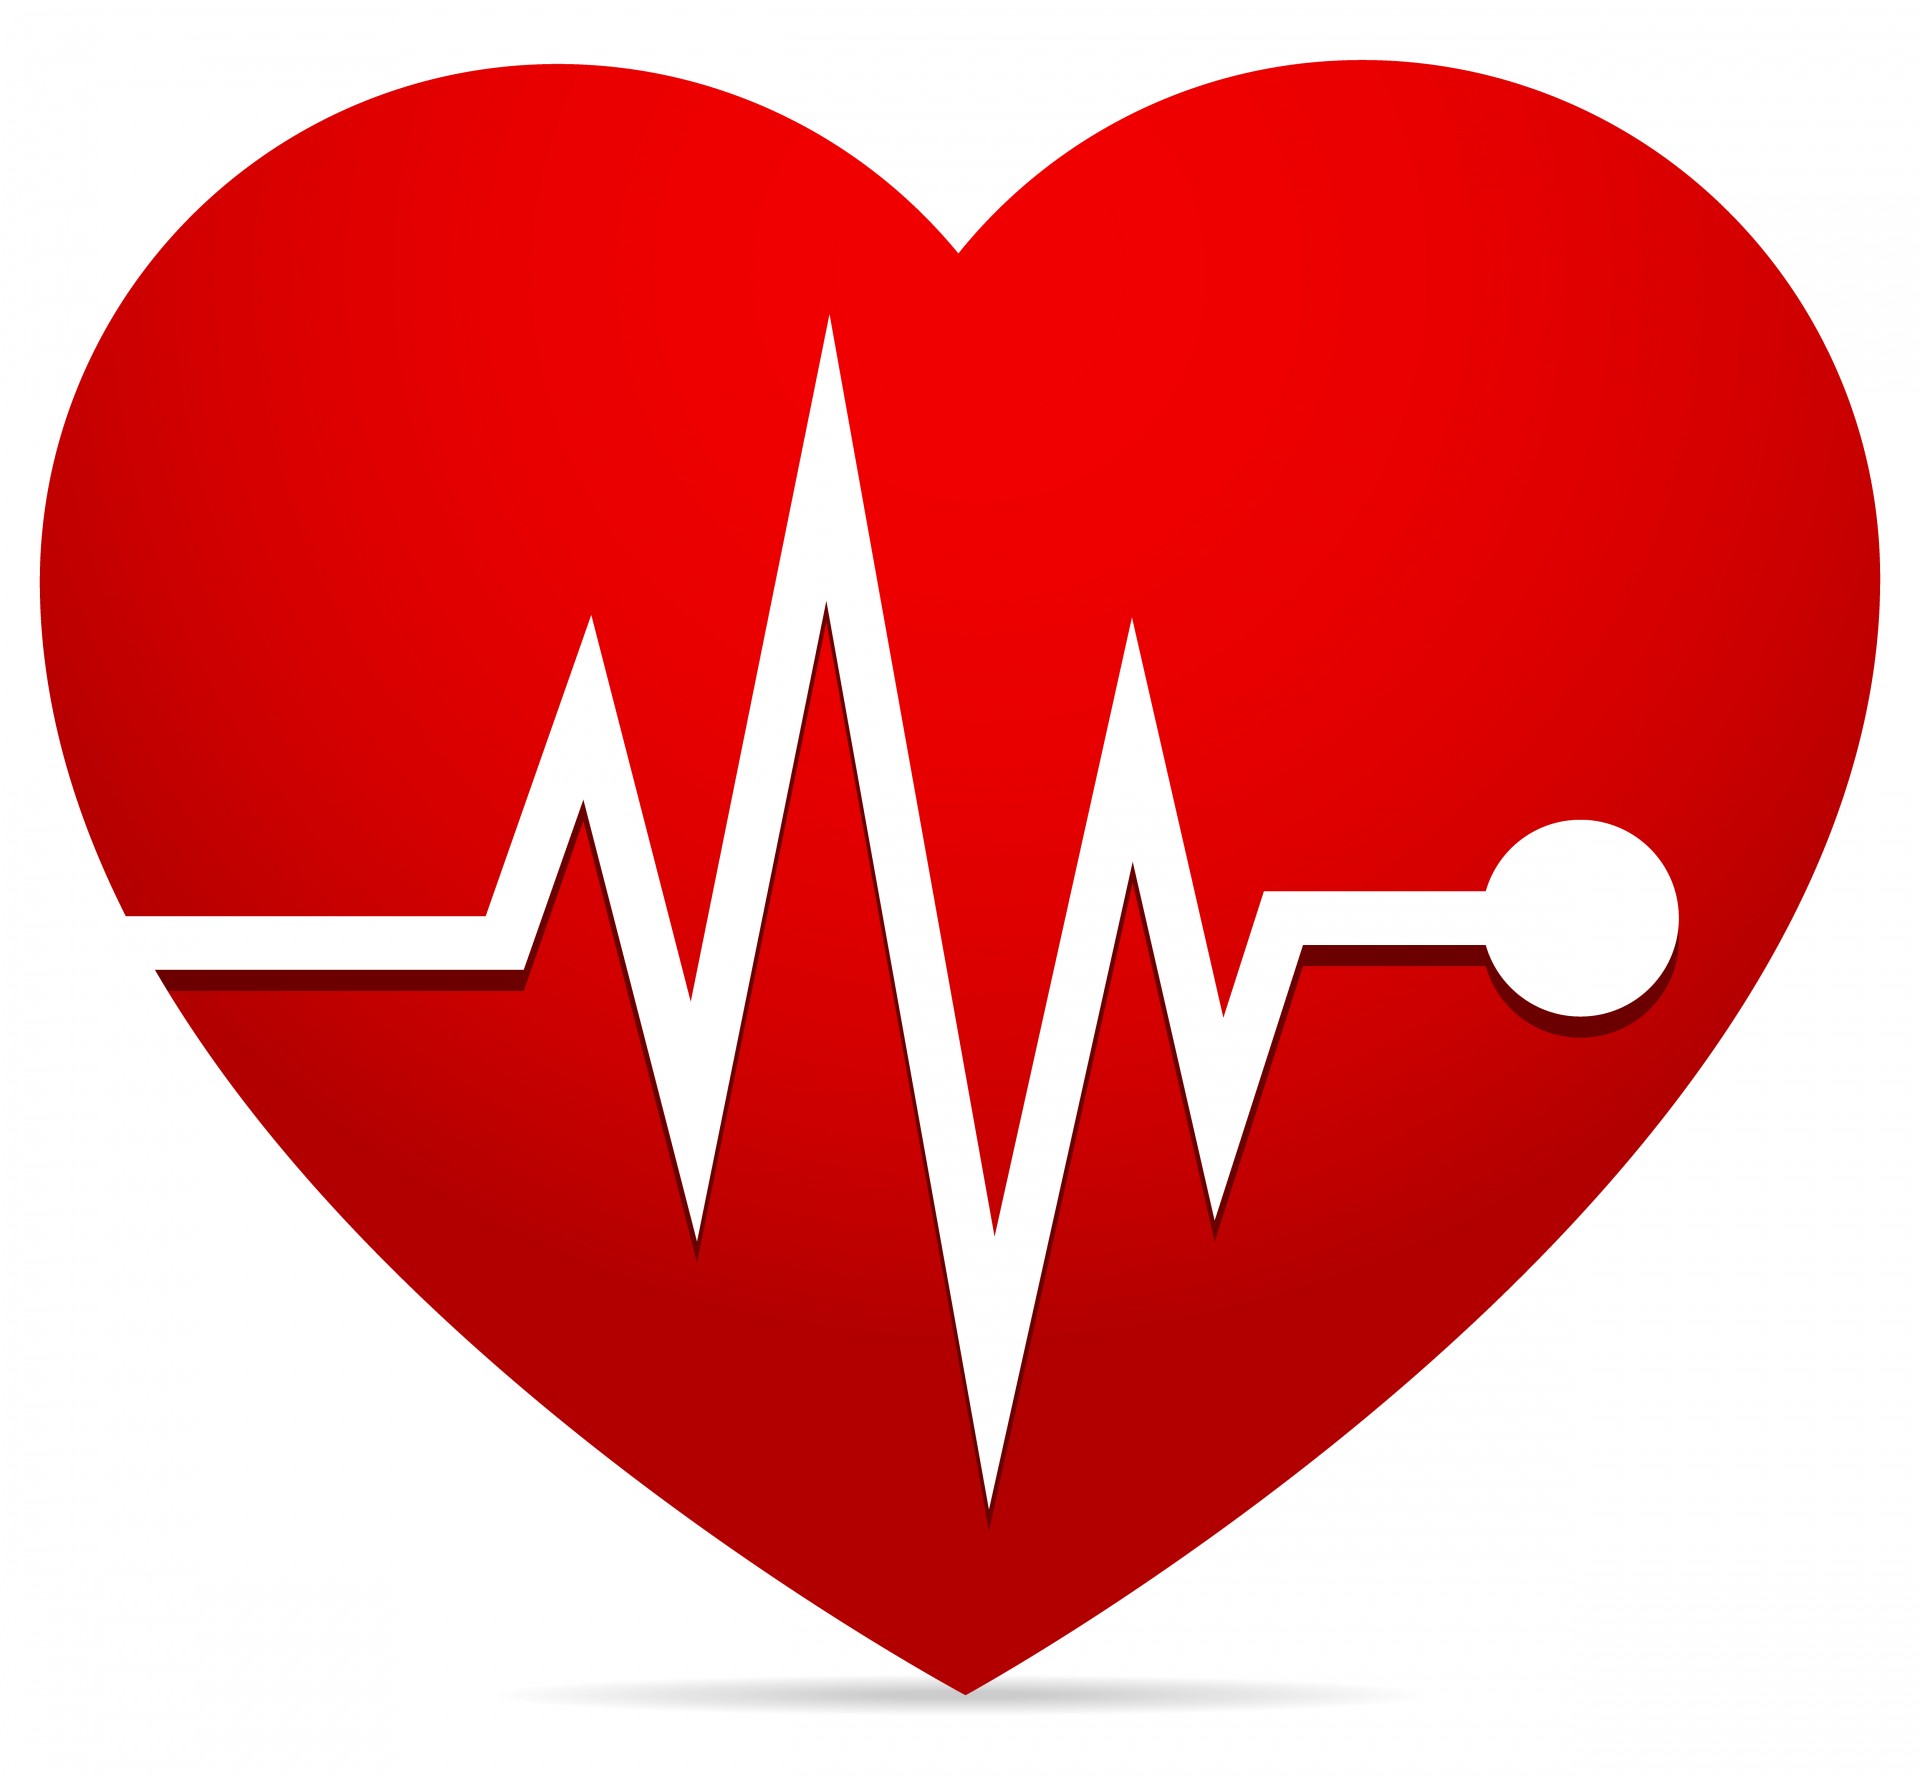 Heart Rate Ekg Ecg Heart Beat Free Stock Photo Hd Public Domain